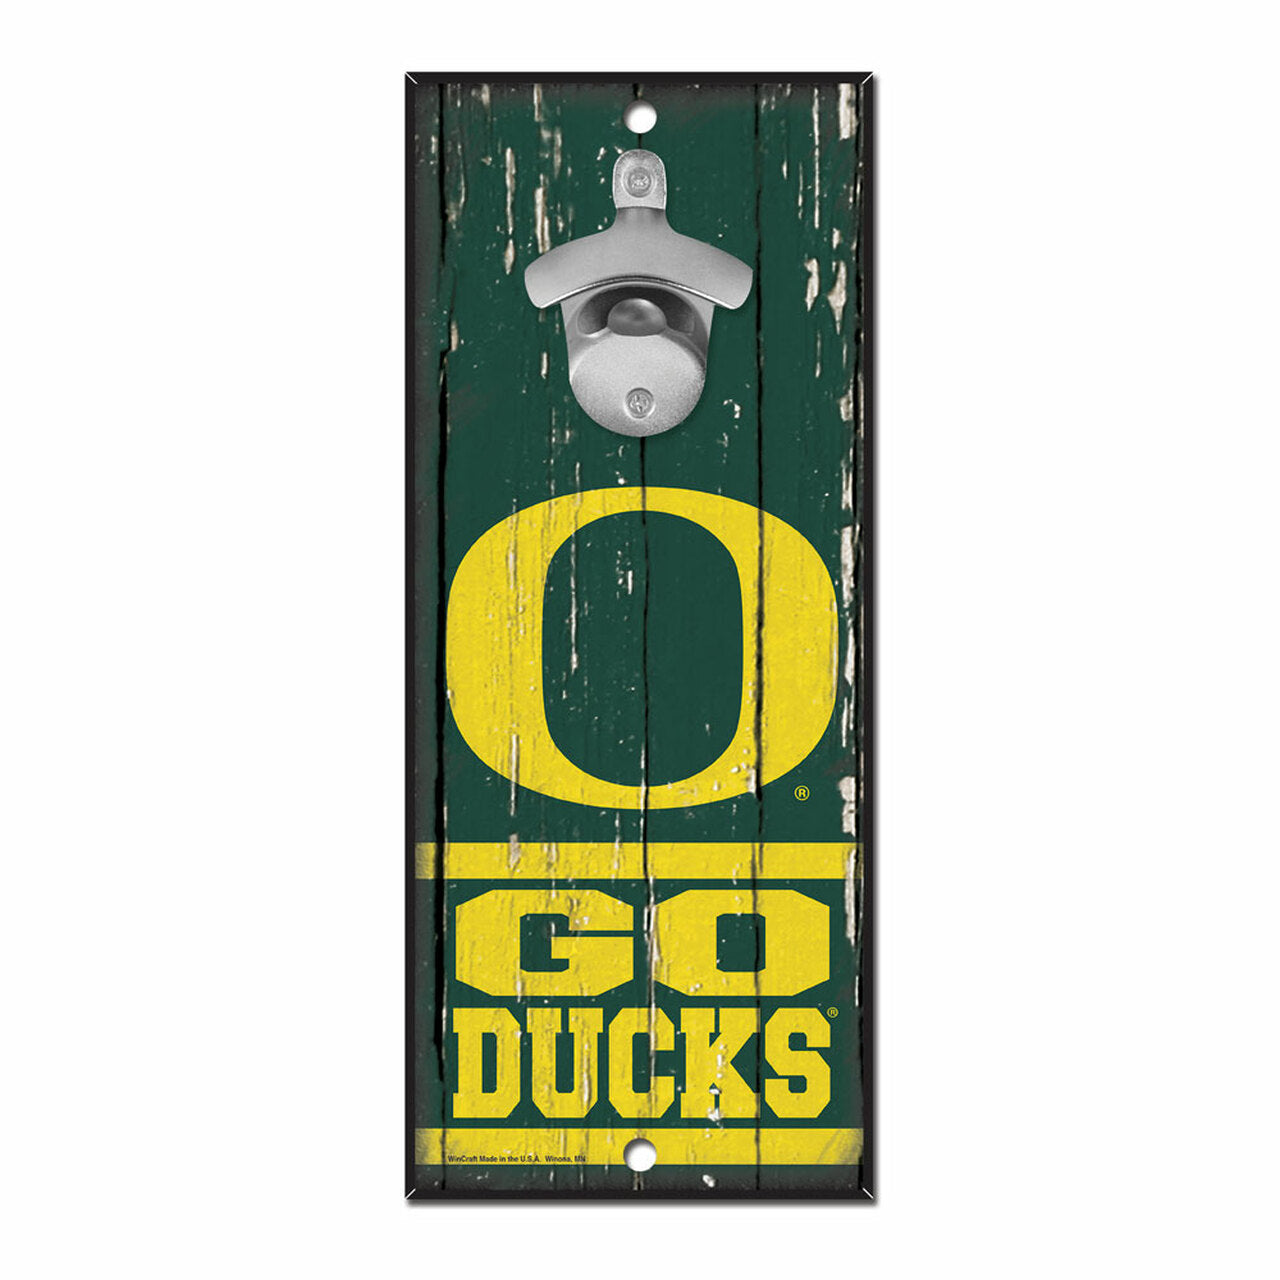 Oregon Ducks 5" x 11" Bottle Opener Wood Sign by Wincraft